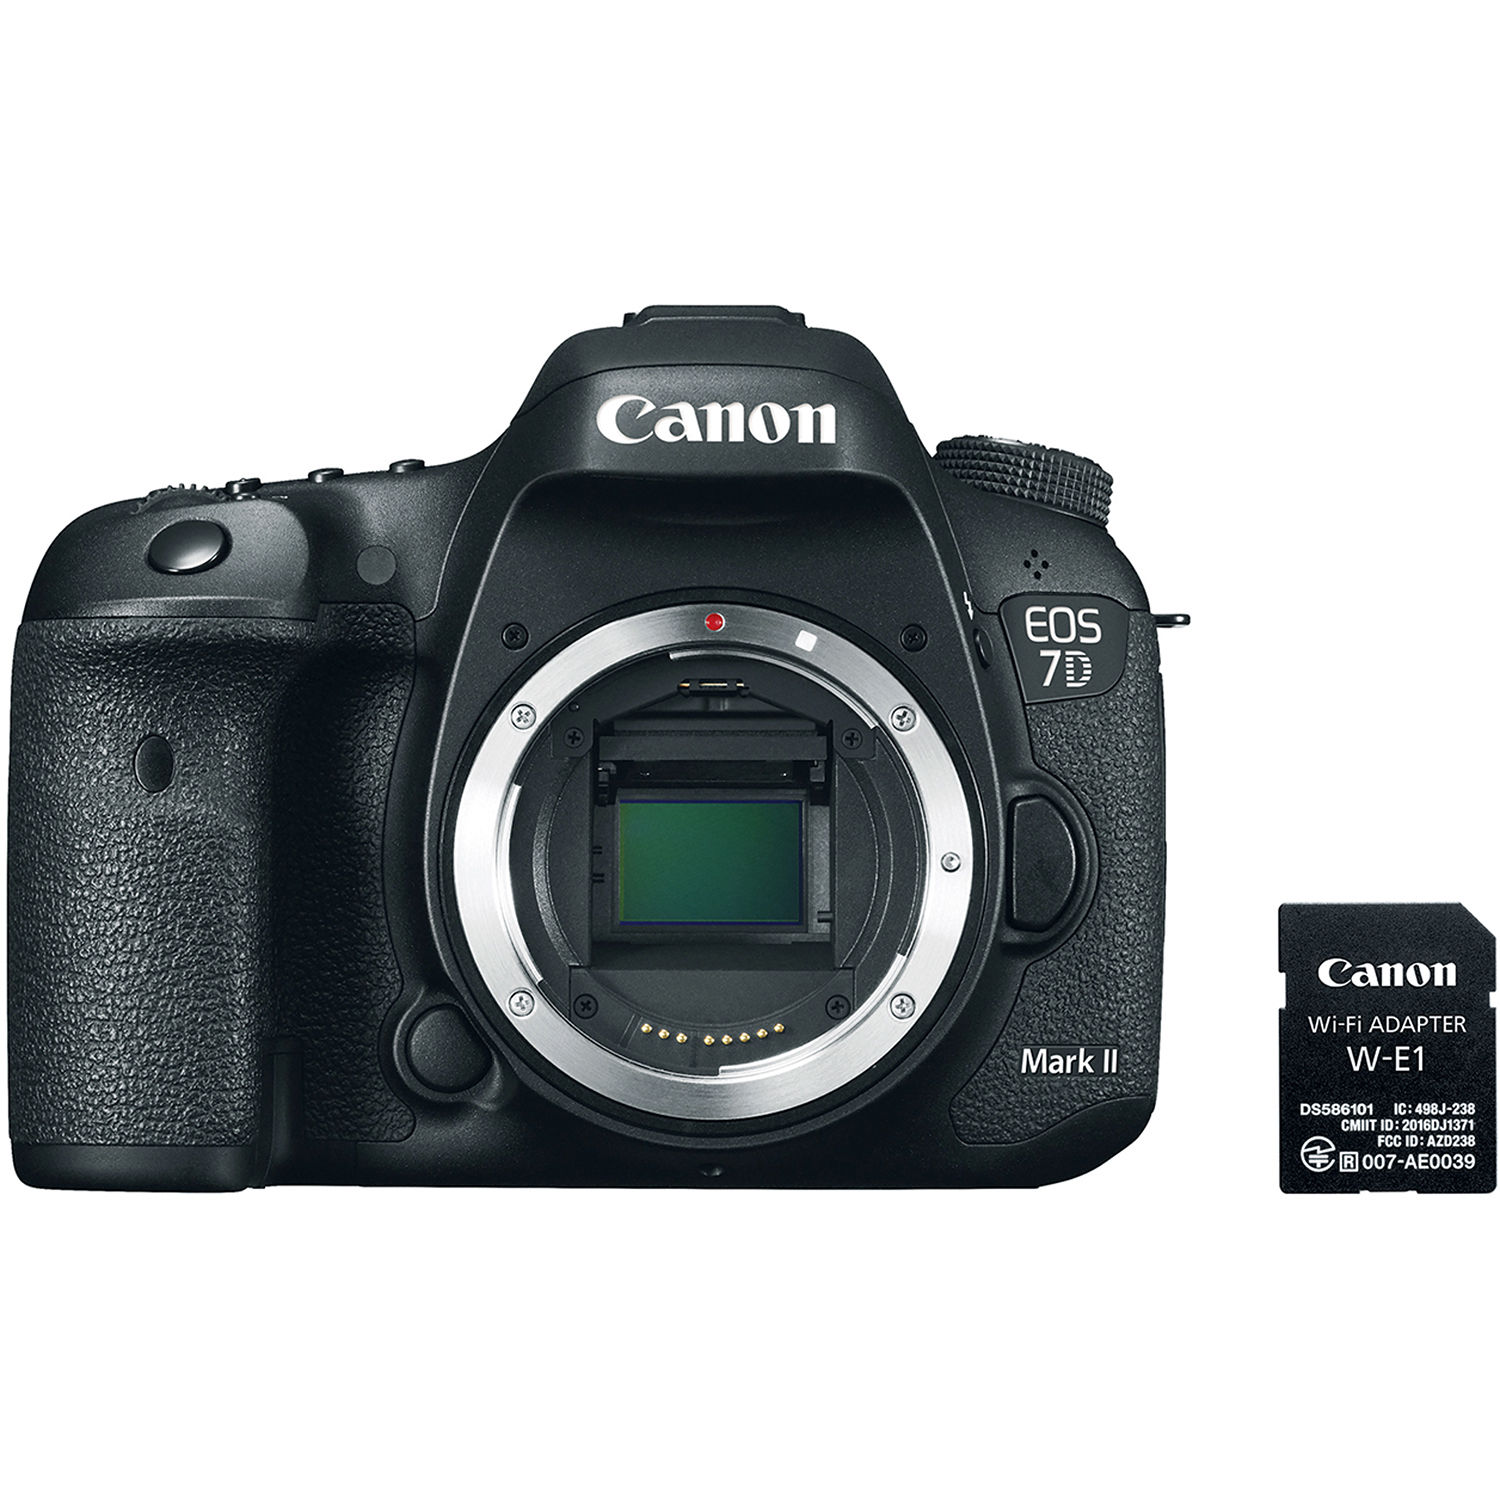 Canon EOS 7D Mark II (G)  DSLR Camera  Body with W-E1 Wi-Fi Adapter